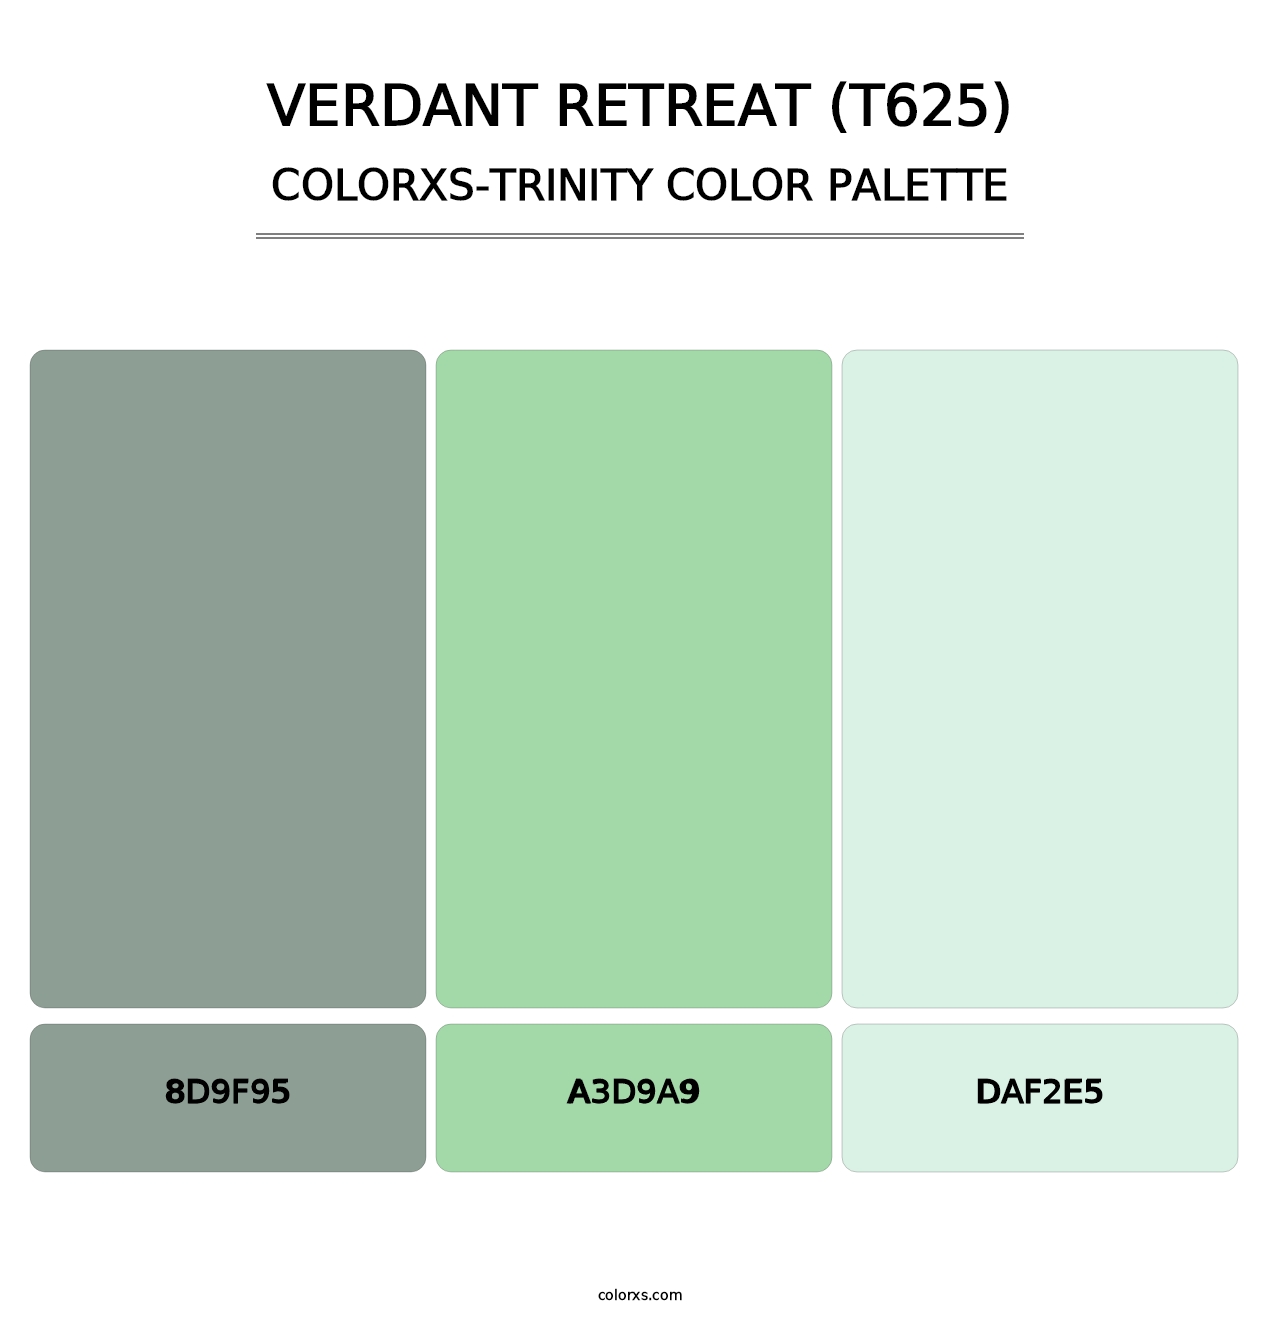 Verdant Retreat (T625) - Colorxs Trinity Palette